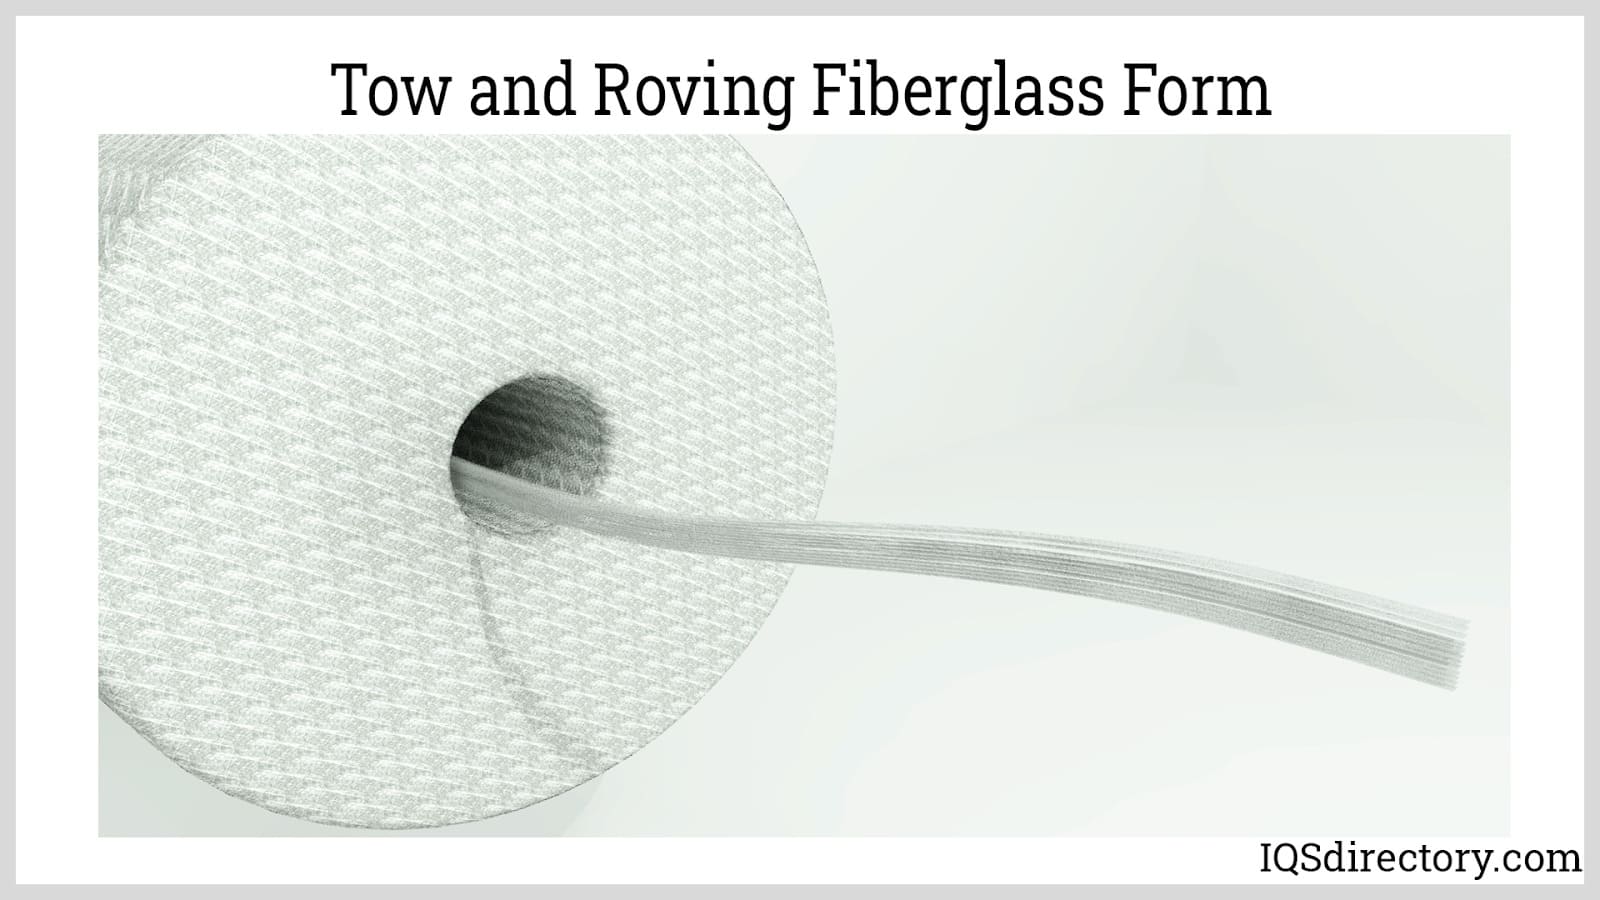 Tow and Roving Fiberglass Form